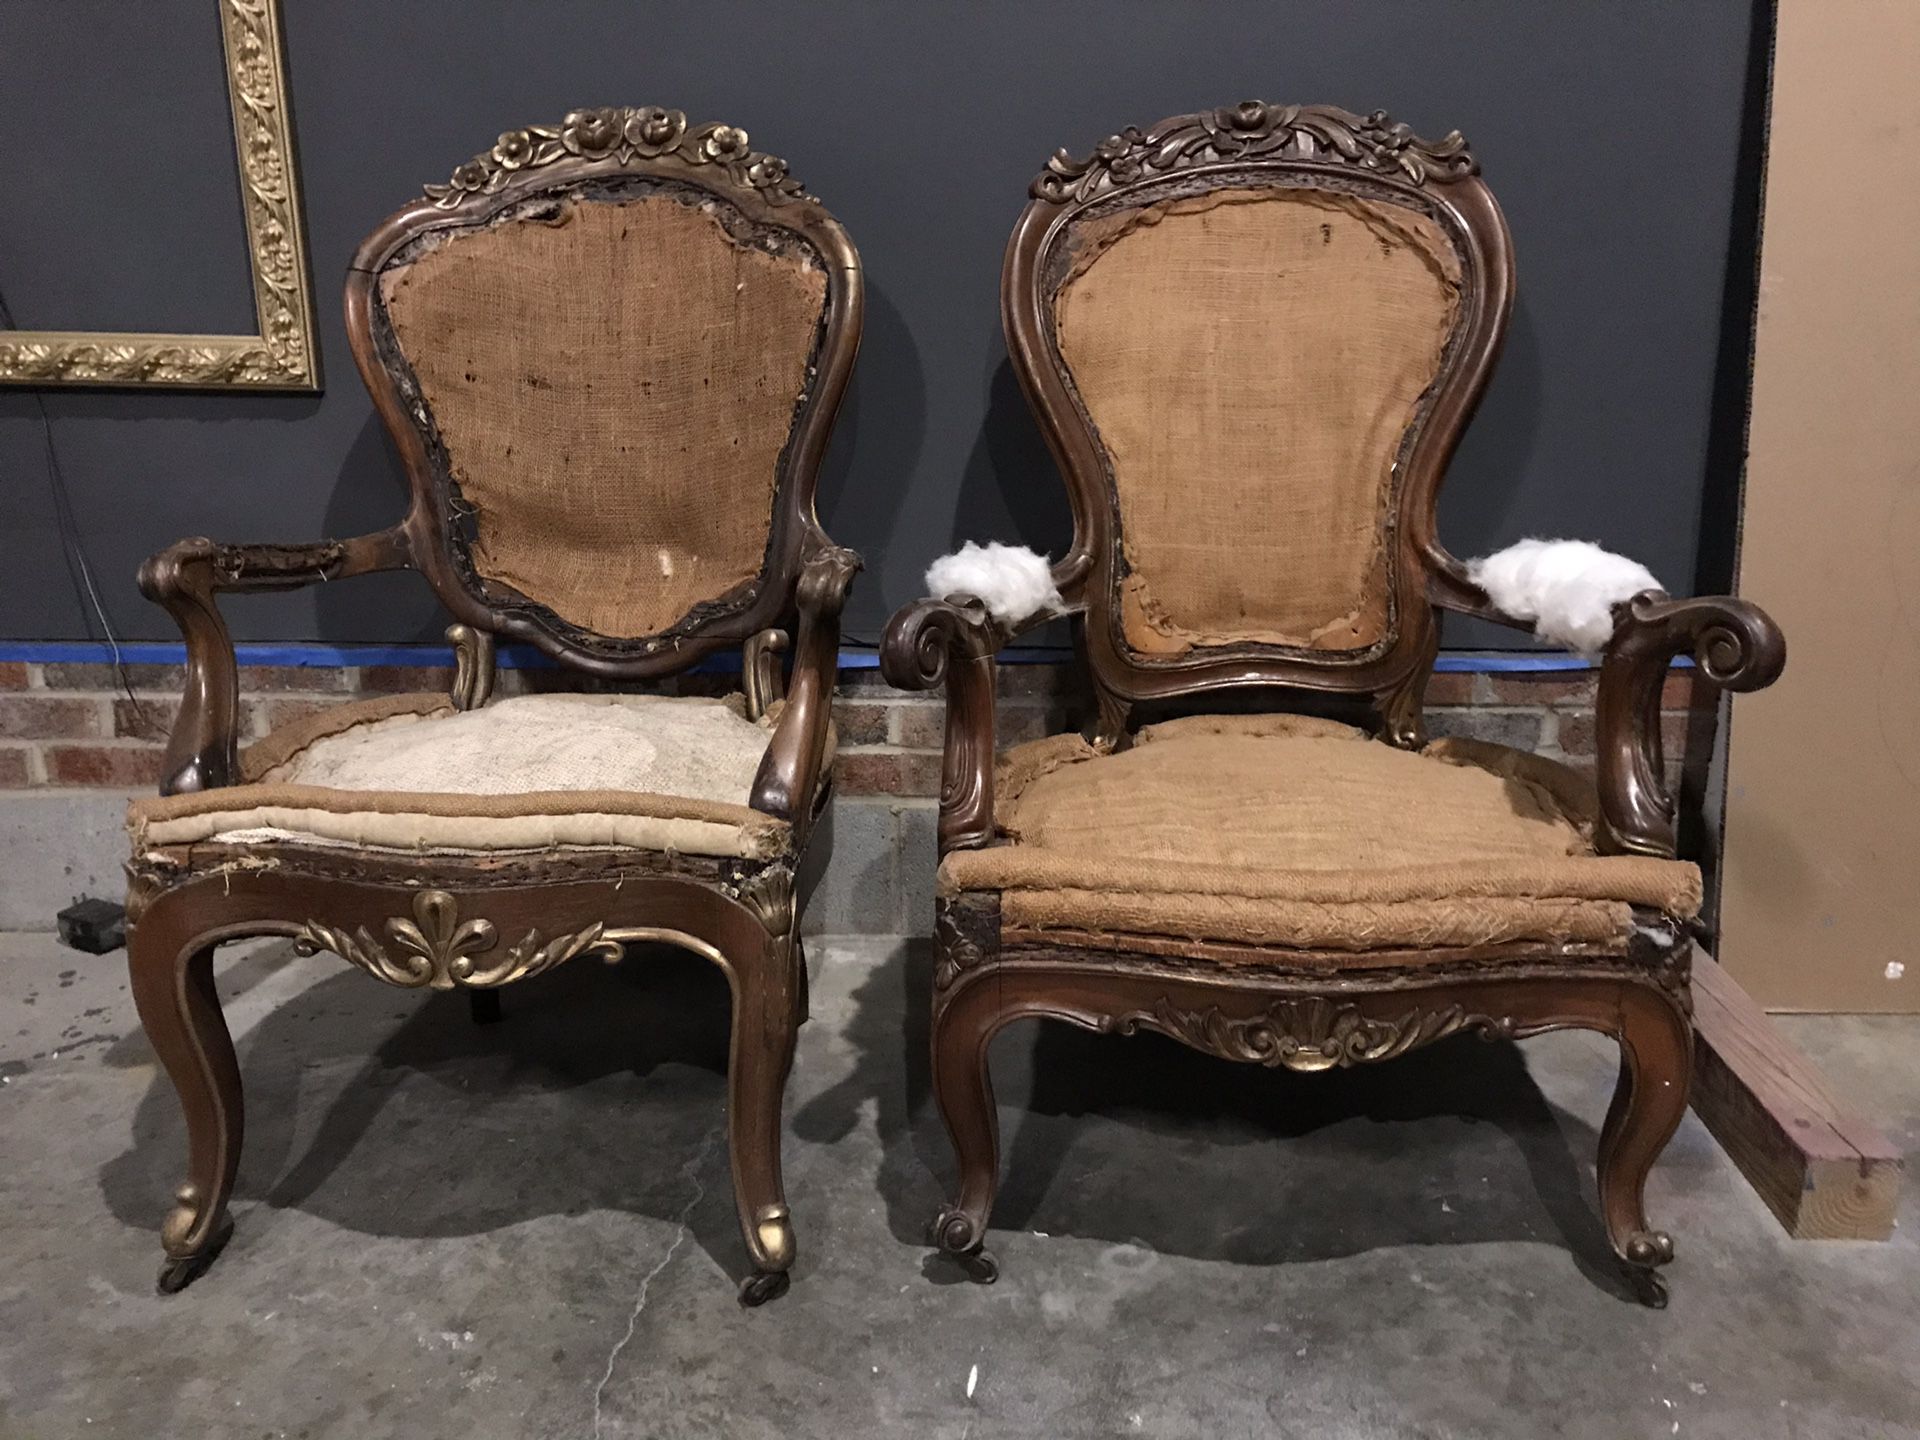 Victorian chairs...Beautiful